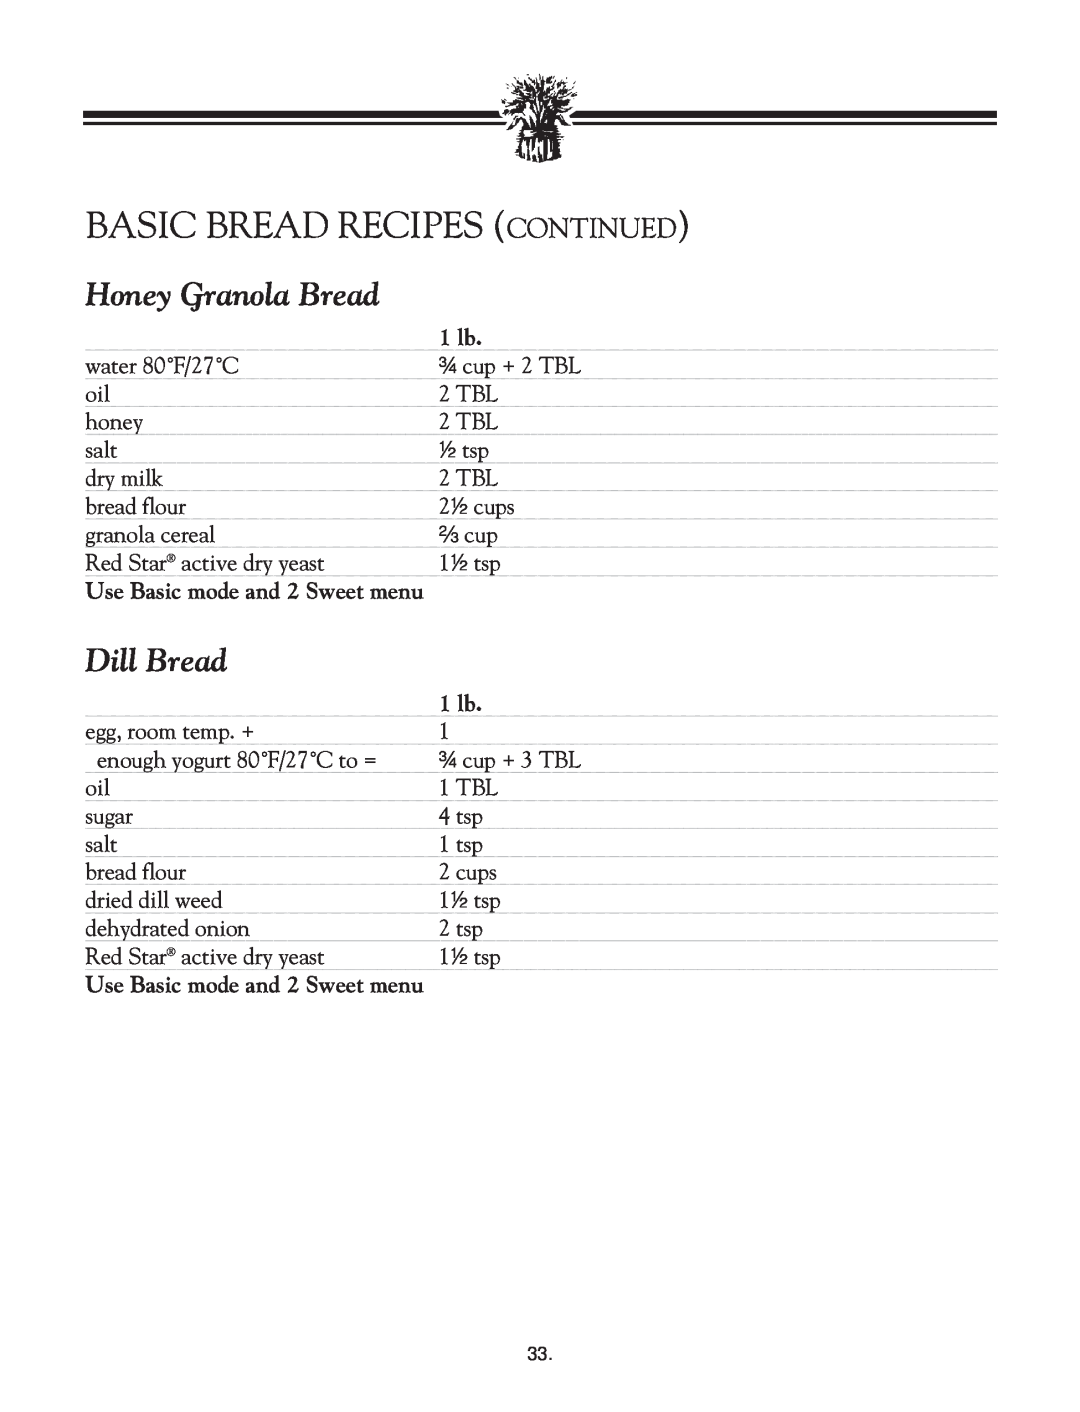 Breadman TR2828G instruction manual Honey Granola Bread, Dill Bread, Basic Bread Recipes Continued 